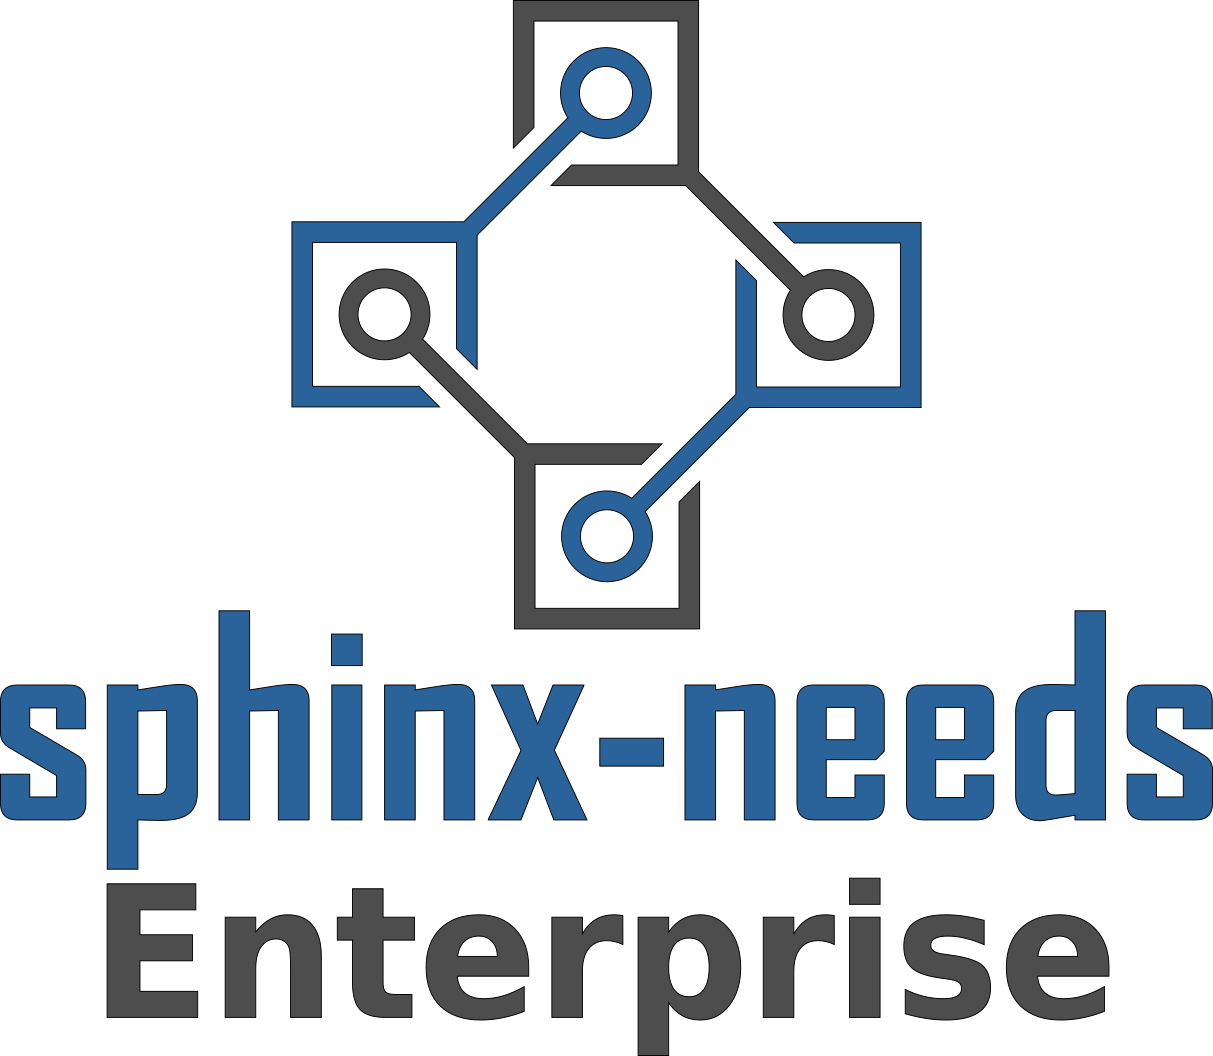 docs/_static/sphinx-needs-enterprise-logo.png